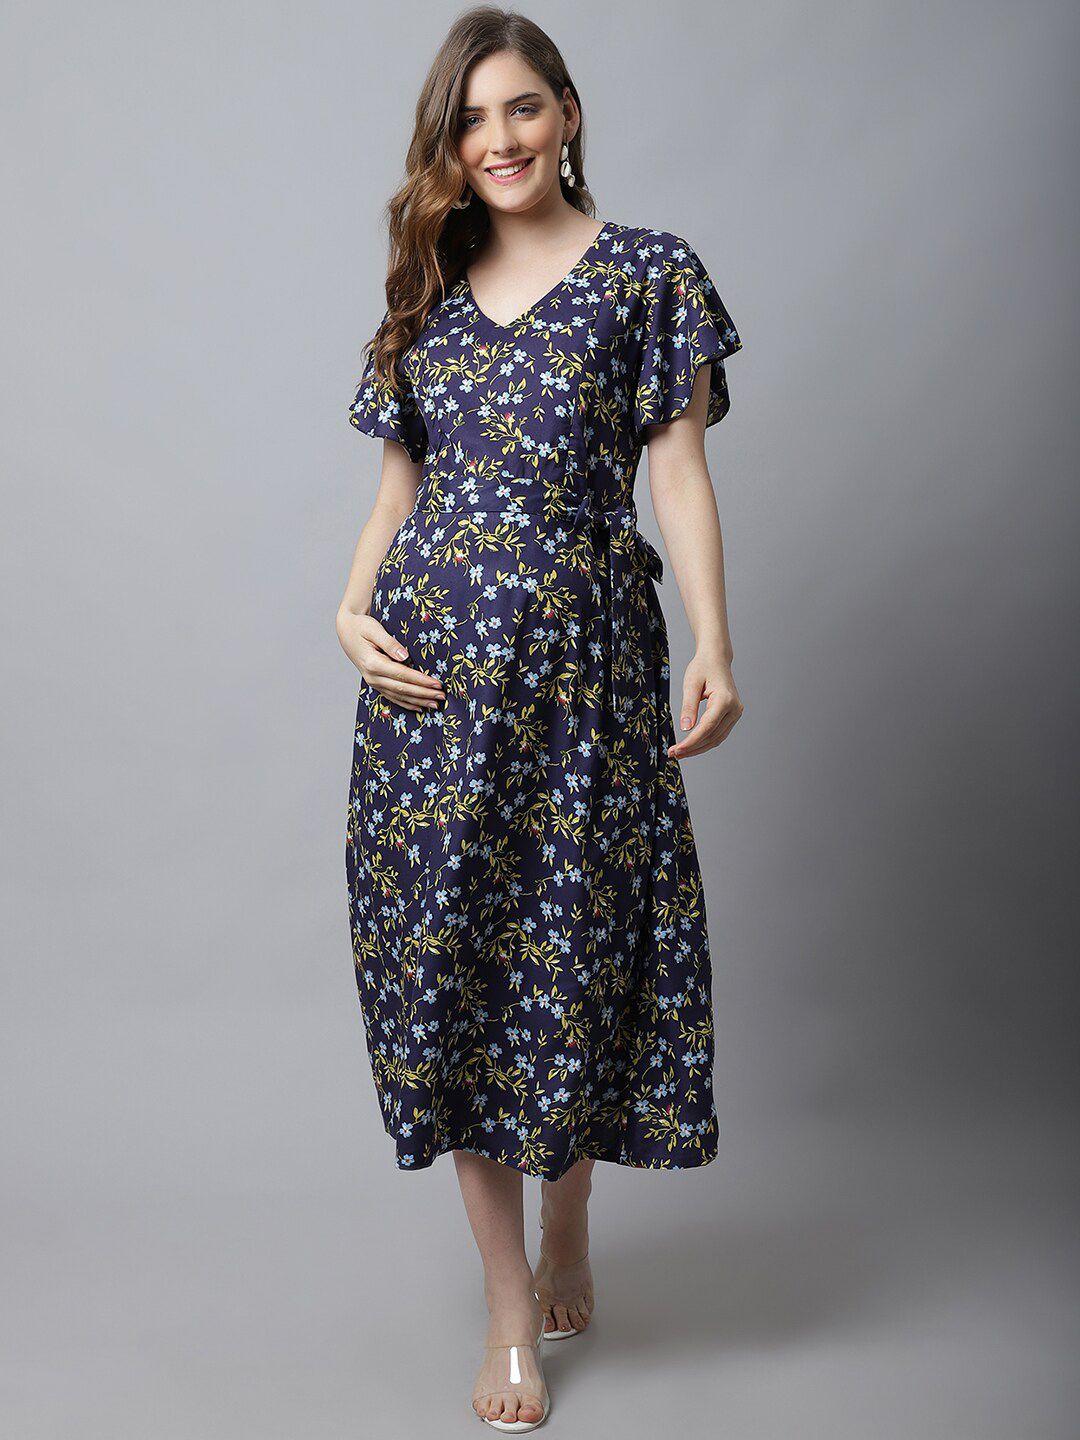 frempy navy blue floral maternity a-line midi dress